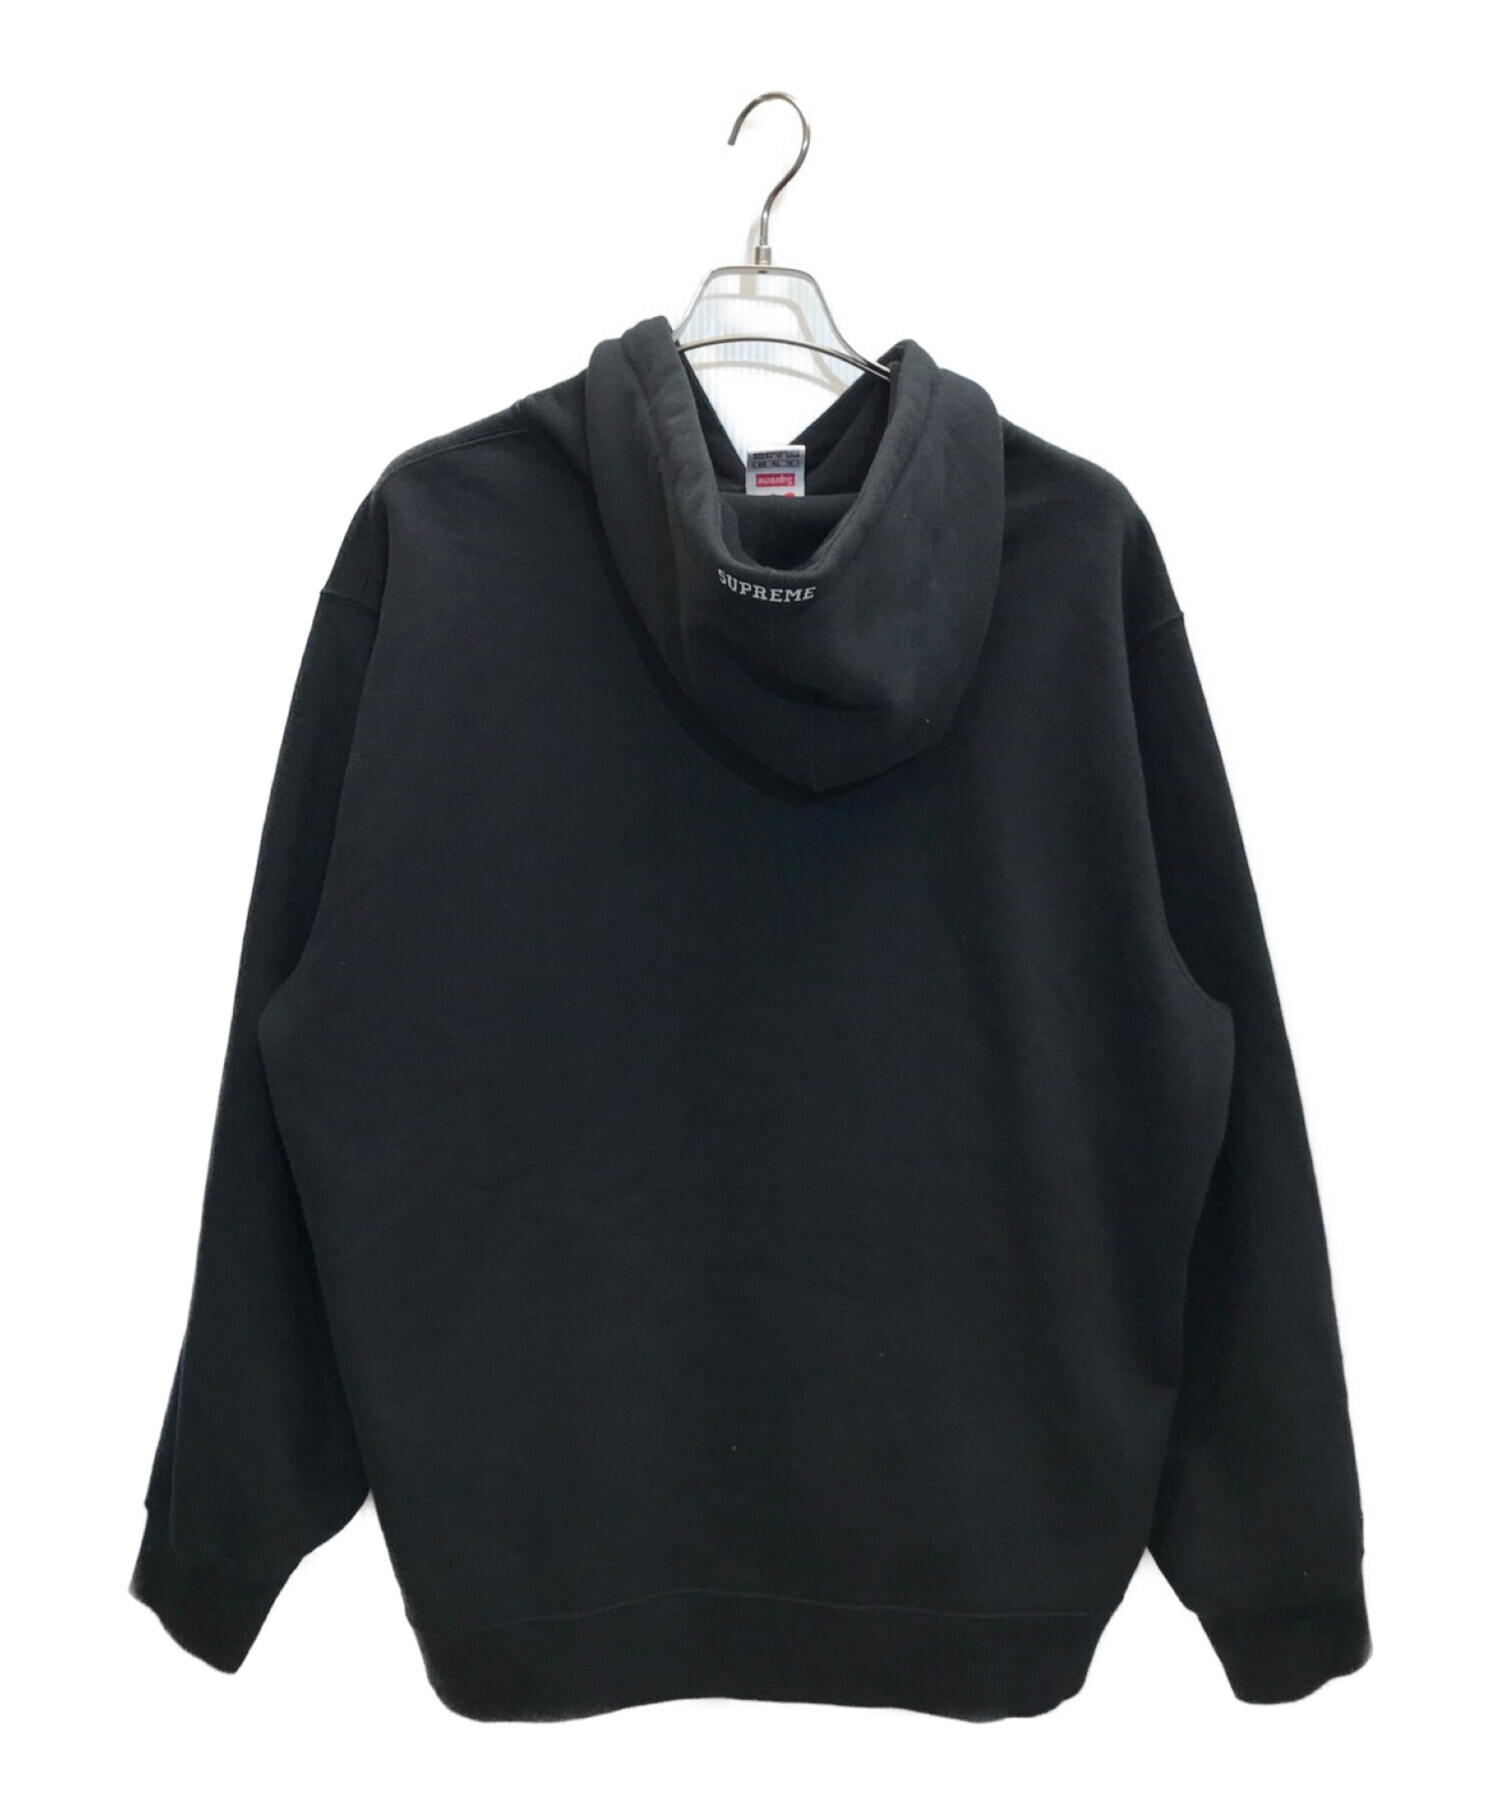 XL Nike Applique Hooded Sweatshirt Black